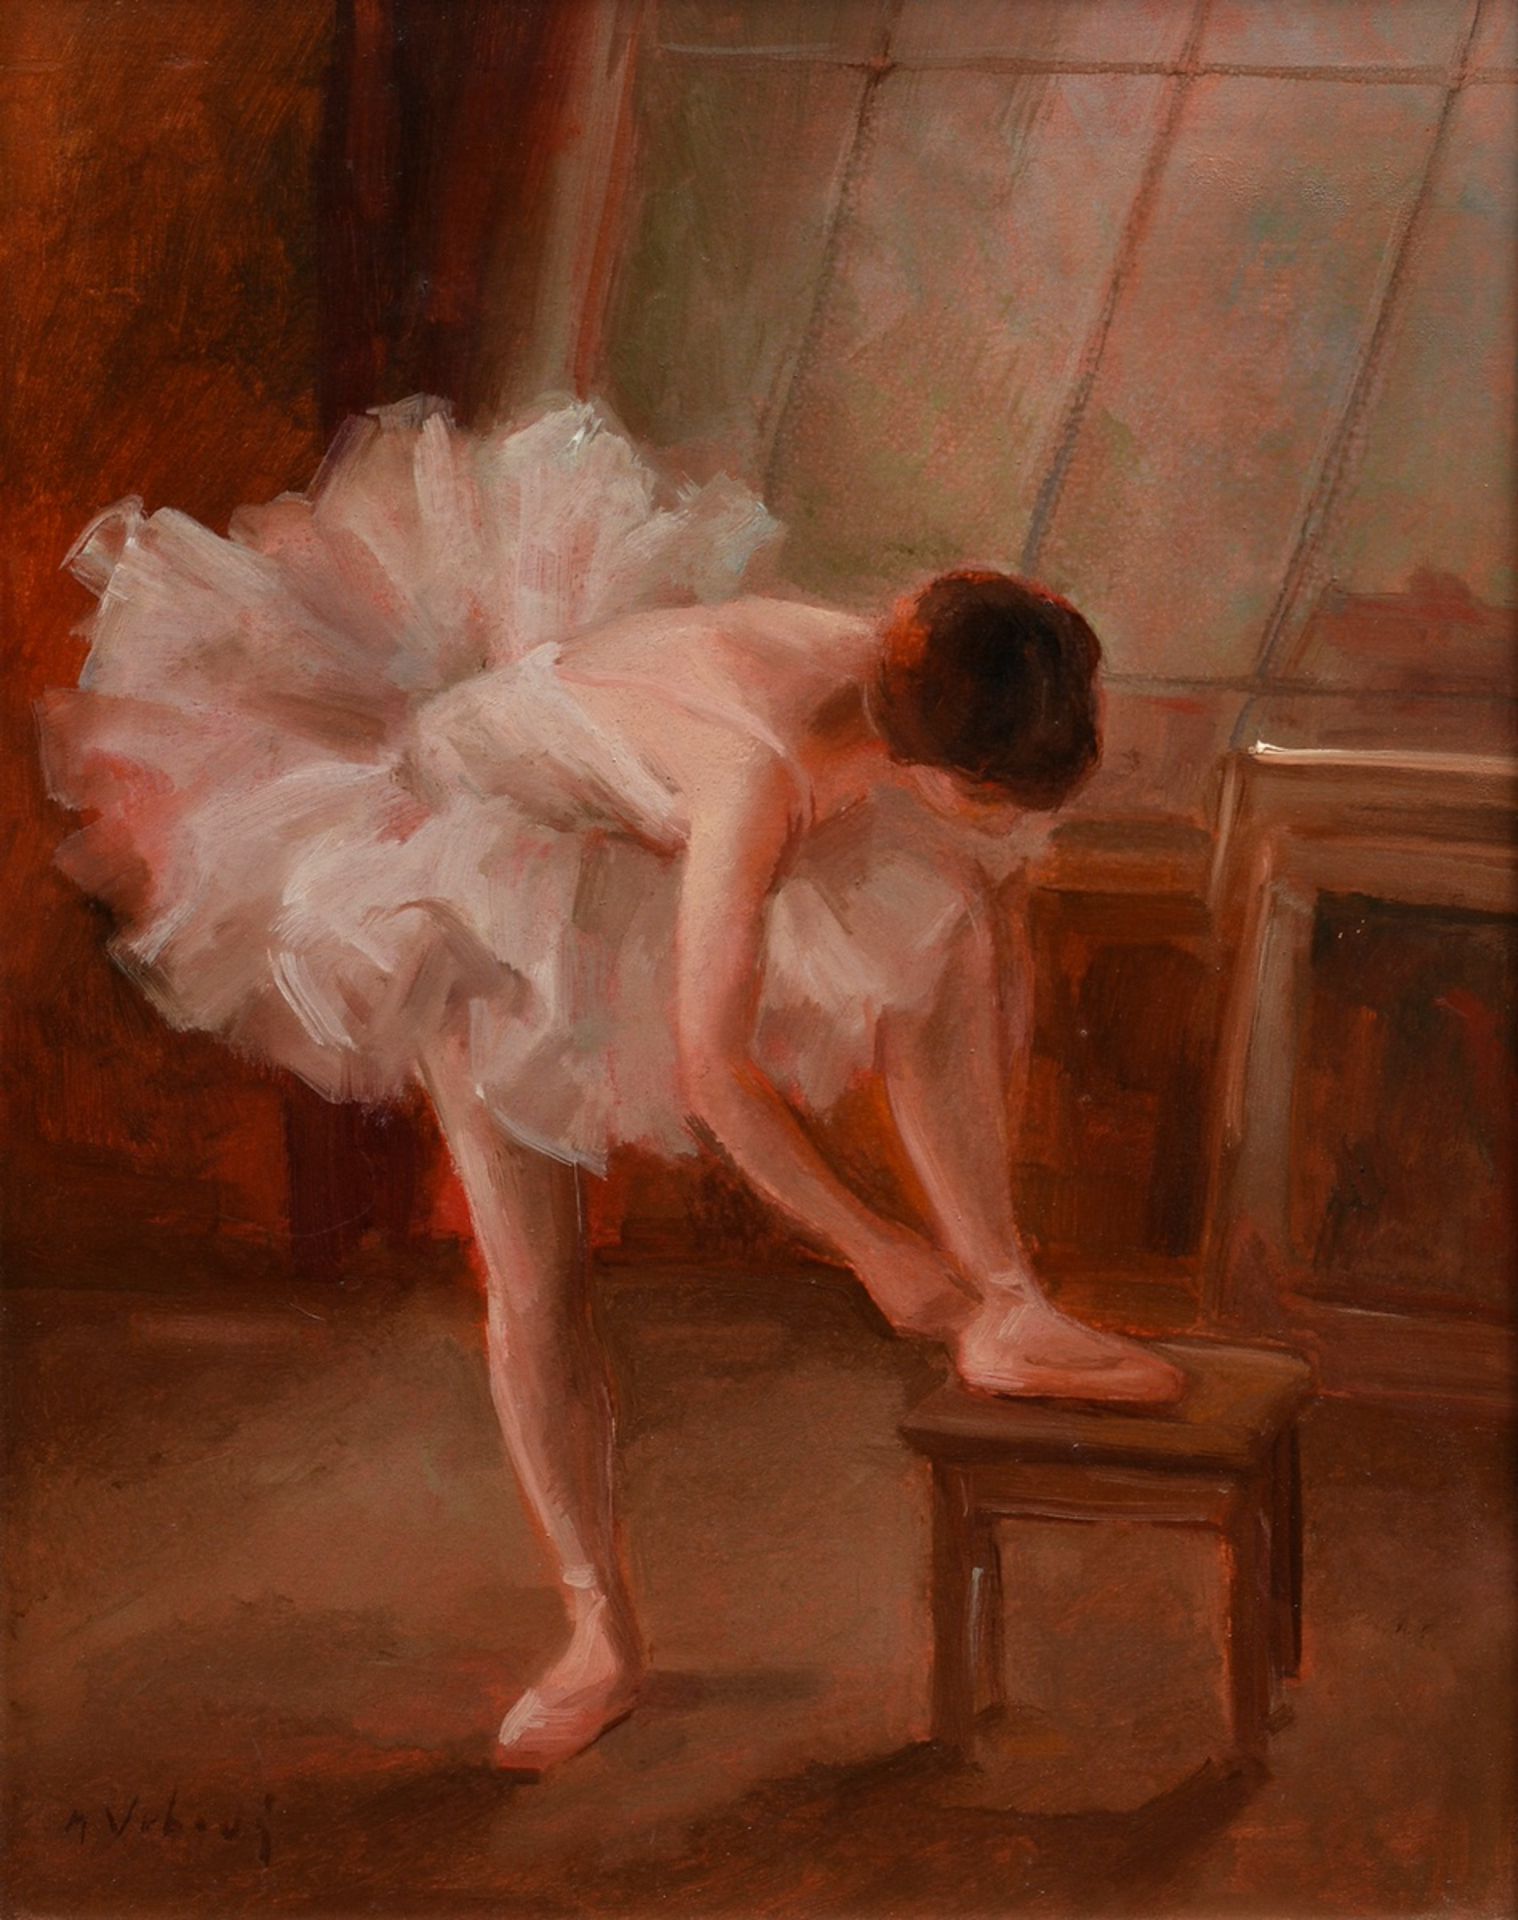 Urbova-Stefkova, Miloslava (1909-1991) "Ballet Dancer", oil/hardboard, b.l. signed, verso inscr., p